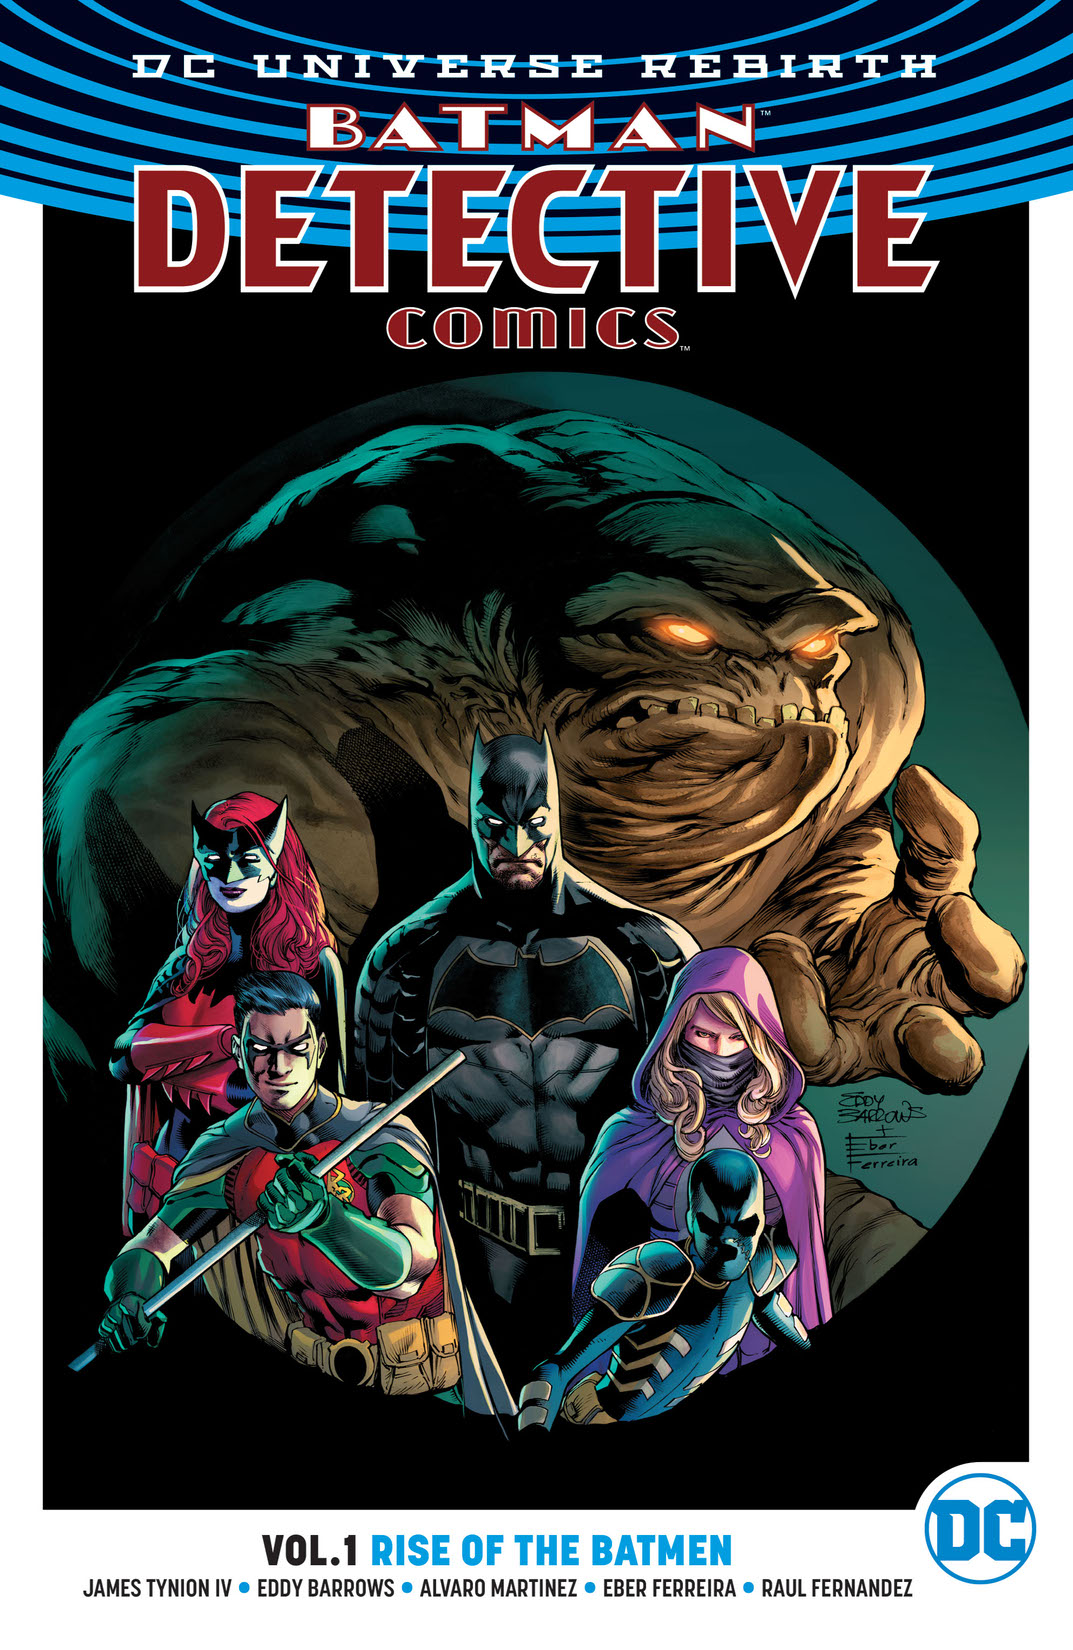 Batman - Detective Comics Vol. 1: Rise of the Batmen preview images